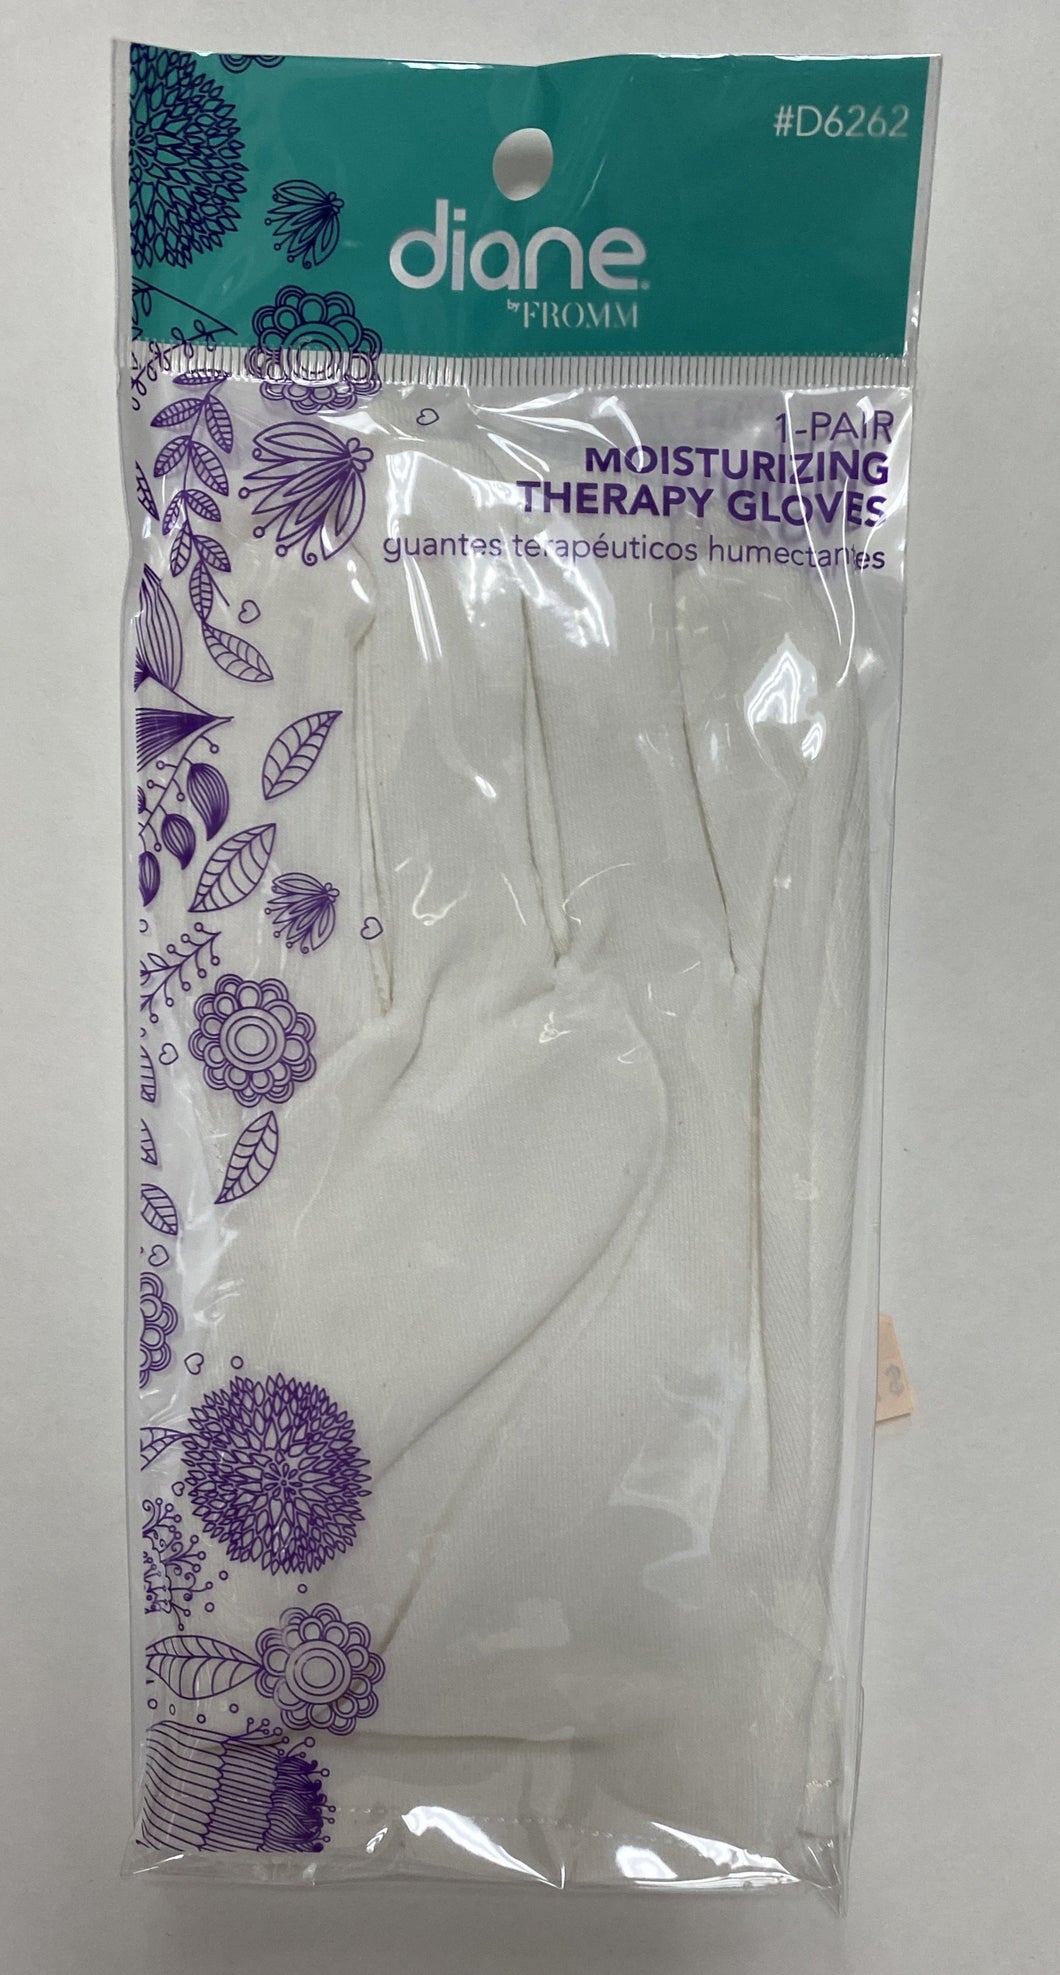 Diane Moisturizing Therapy Gloves - 1 Pair